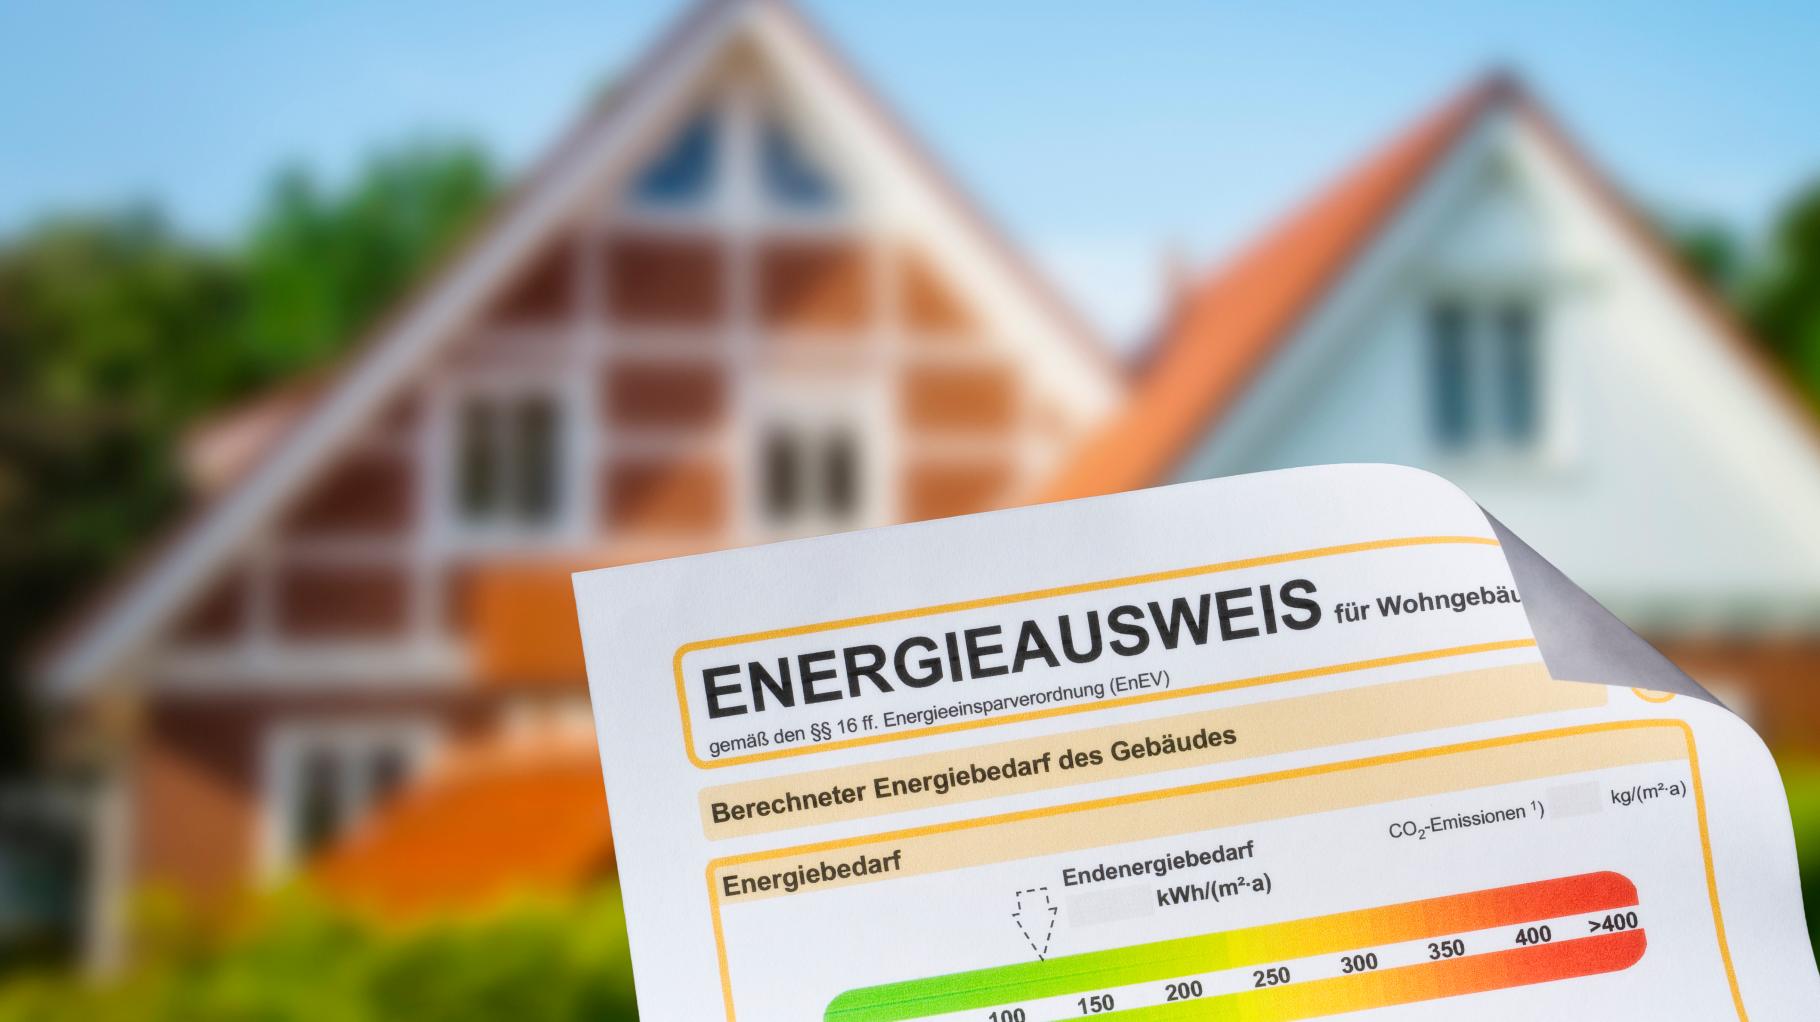 Energiekrise und Immobilien: Das raten Experten Hausbesitzern 